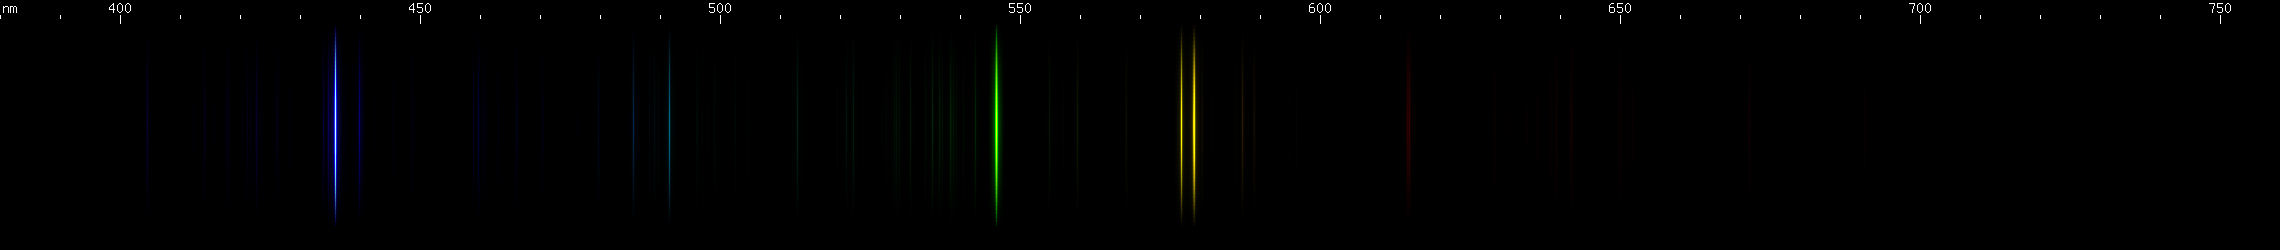 Spectral lines of Mercury.